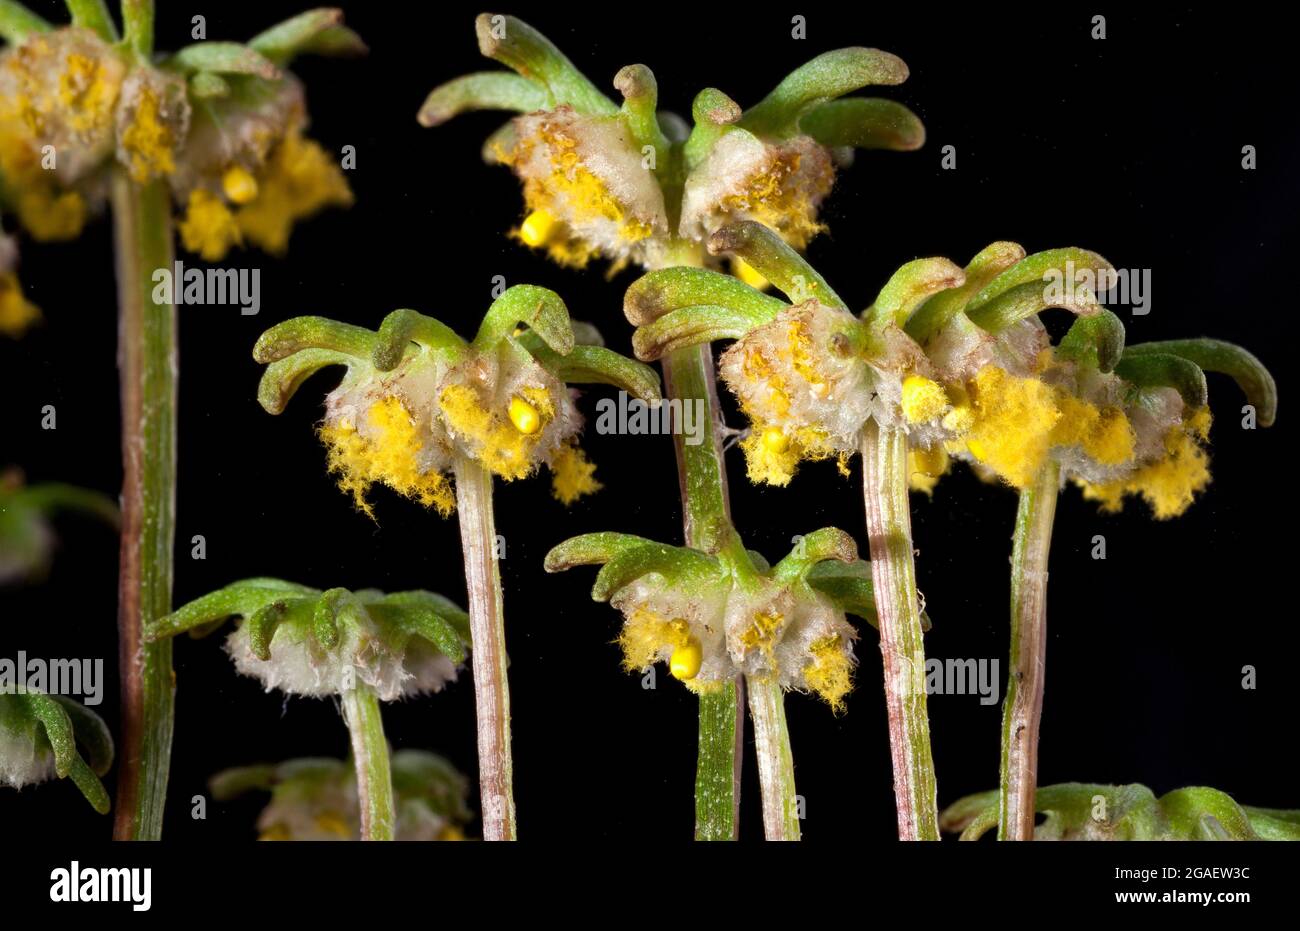 Female, Marchantia liverwort bryophyte, fruiting bodies dispersing spores Stock Photo